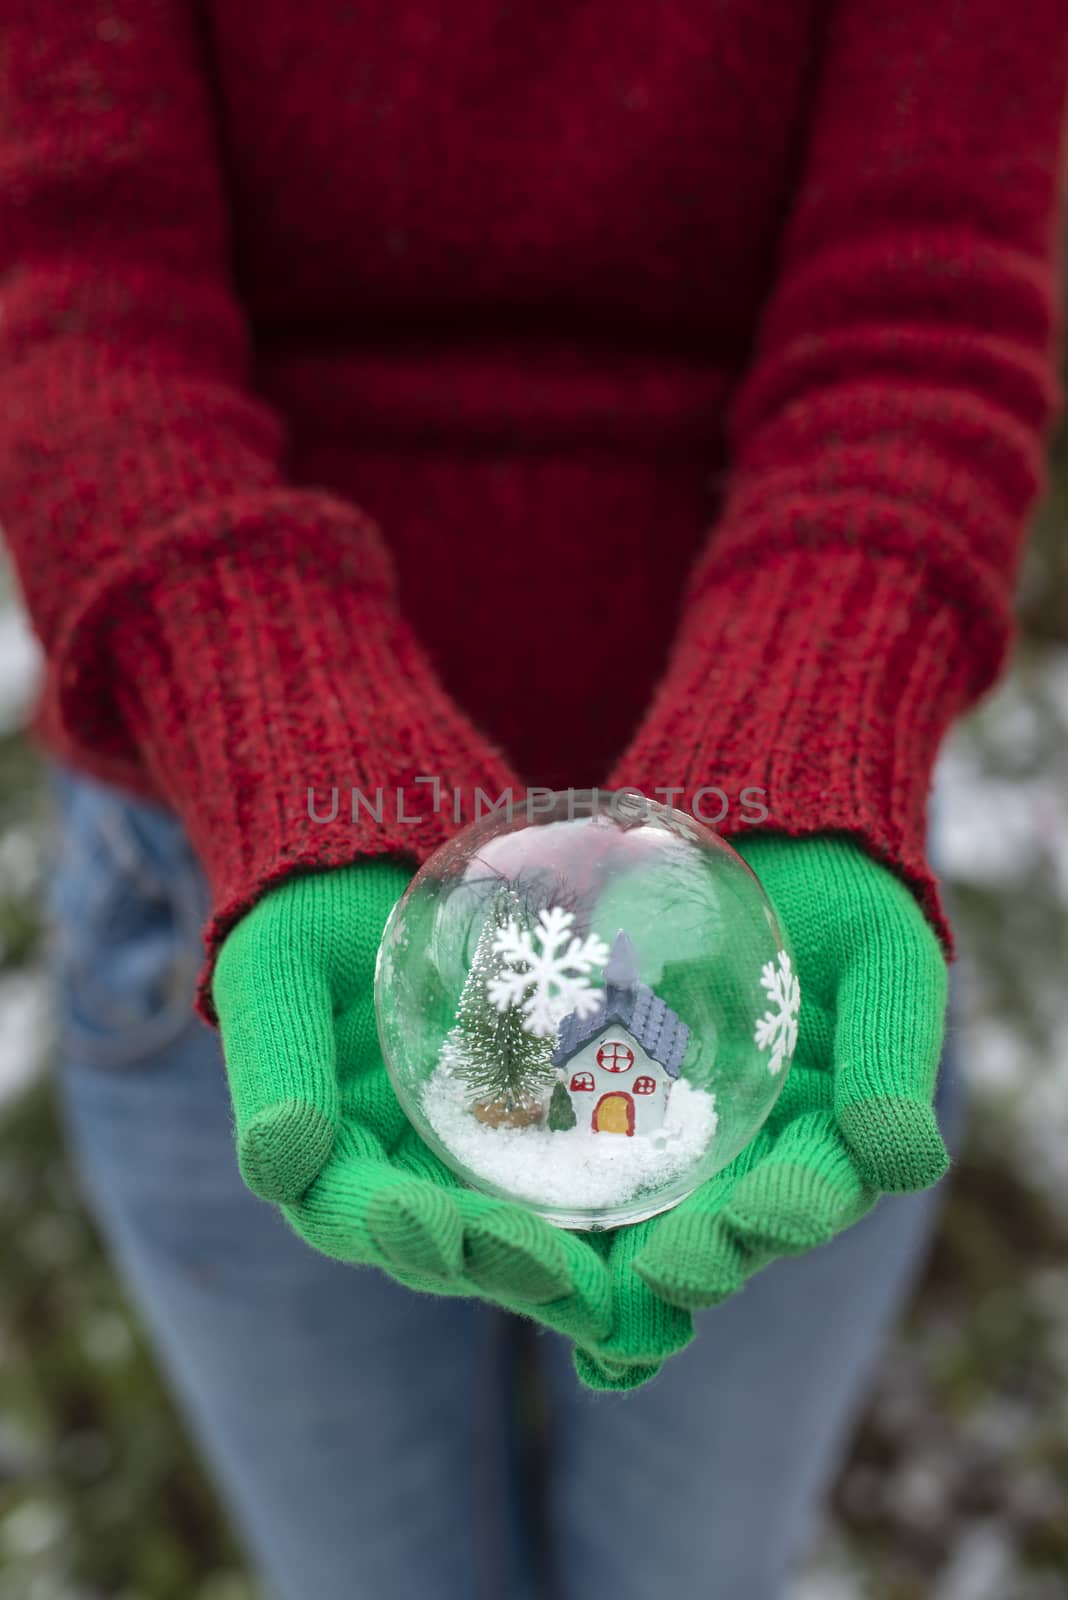 Crystal christmas ball with house and snow inside.  by deyan_georgiev